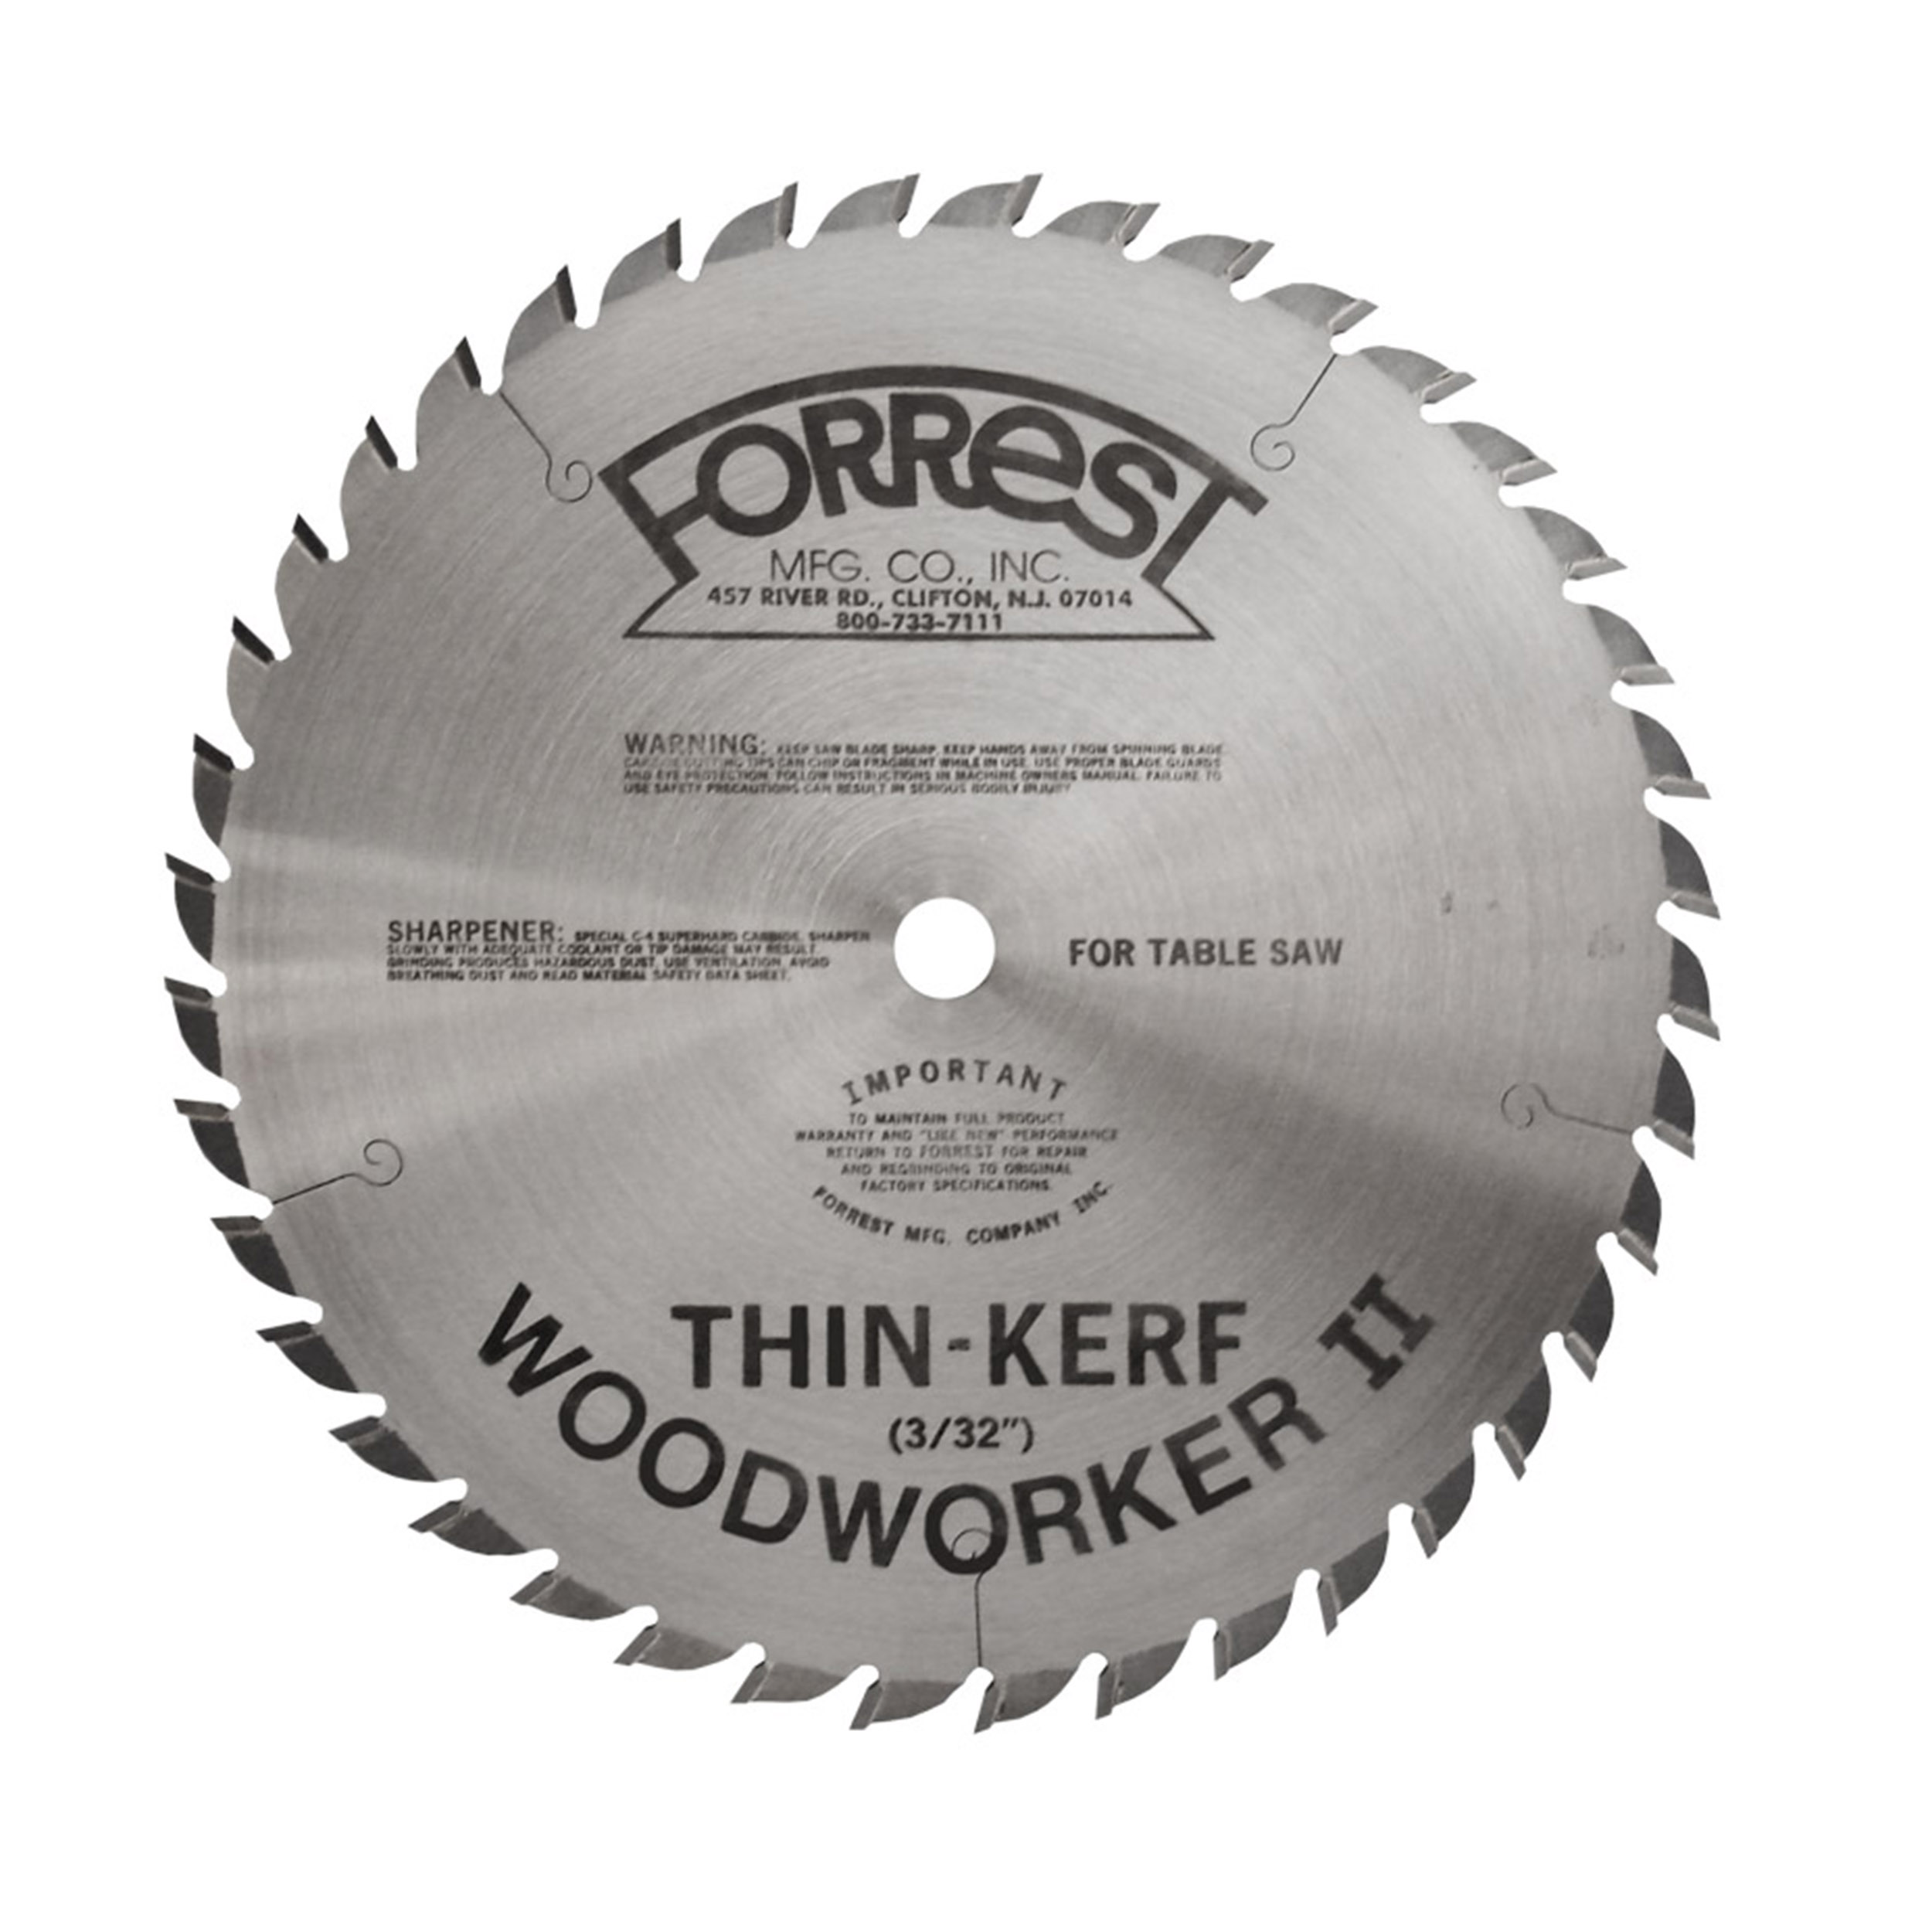 Ww06407100 Woodworker Ii Saw Blade, 6" X 40t, .100 Kerf X 5/8" Bore, Atb